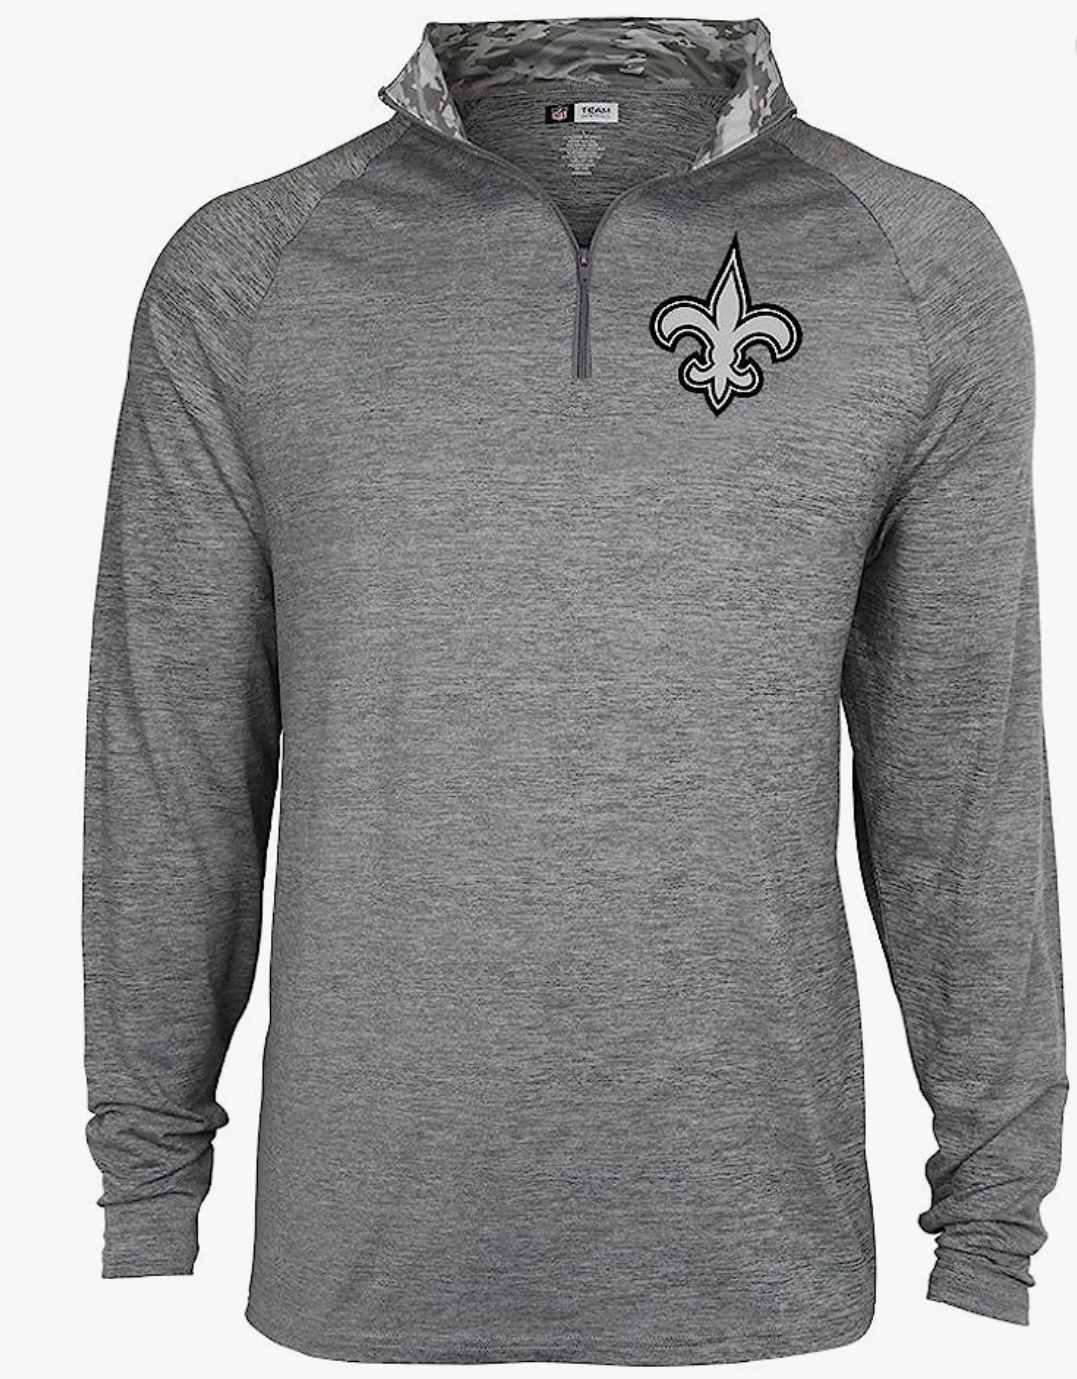 Zubaz NFL Football Men's New Orleans Saints Tonal Gray Quarter Zip Sweatshirt